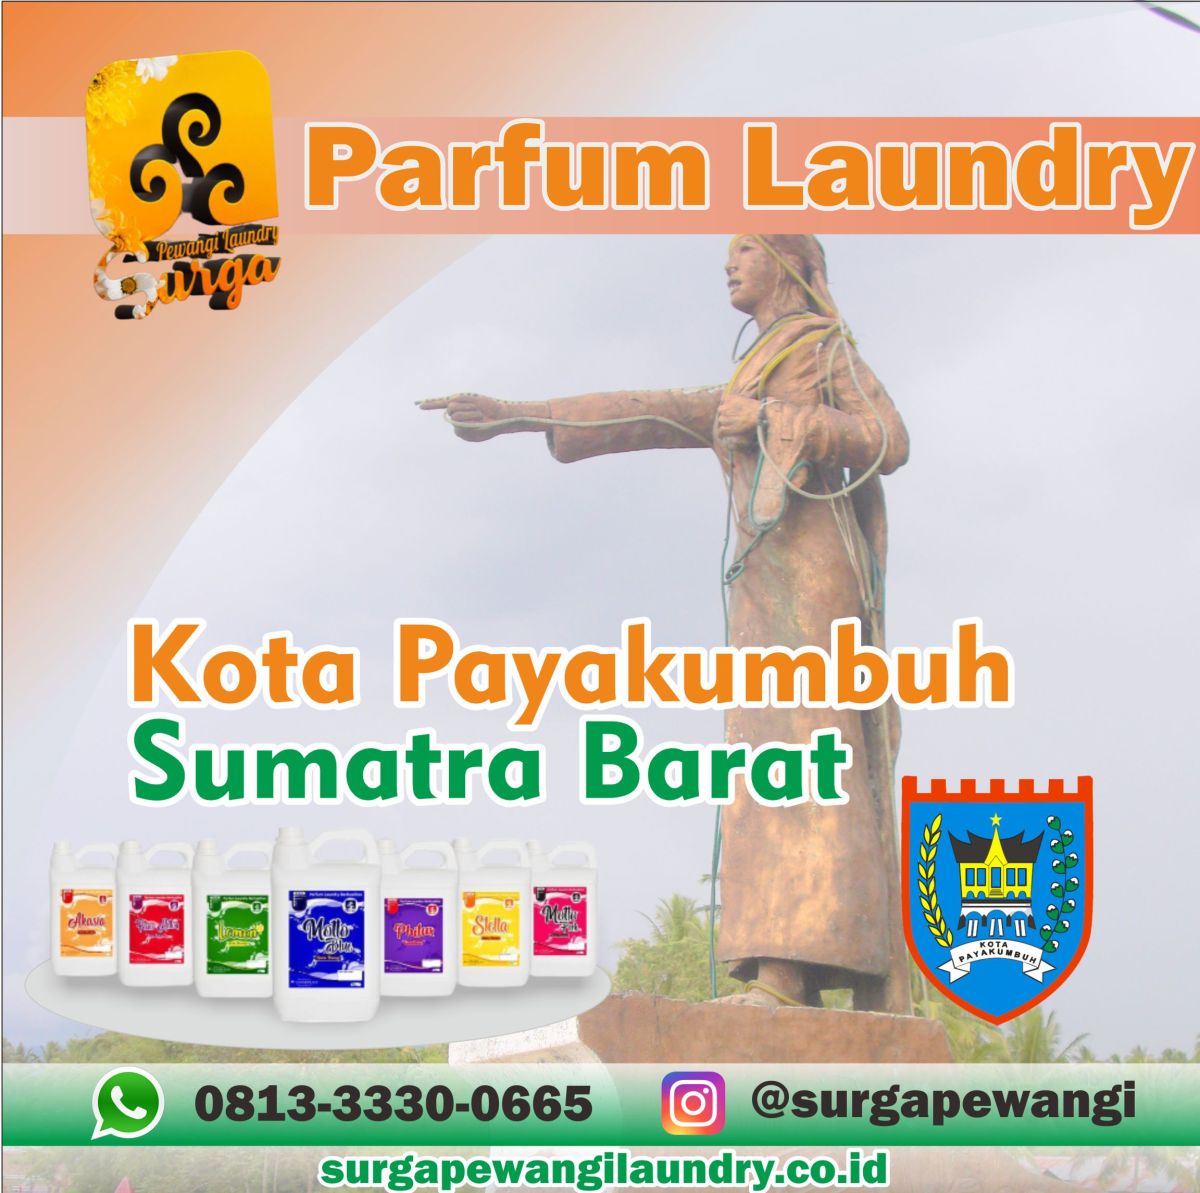 Parfum Laundry Kota Payakumbuh, Sumatra Barat